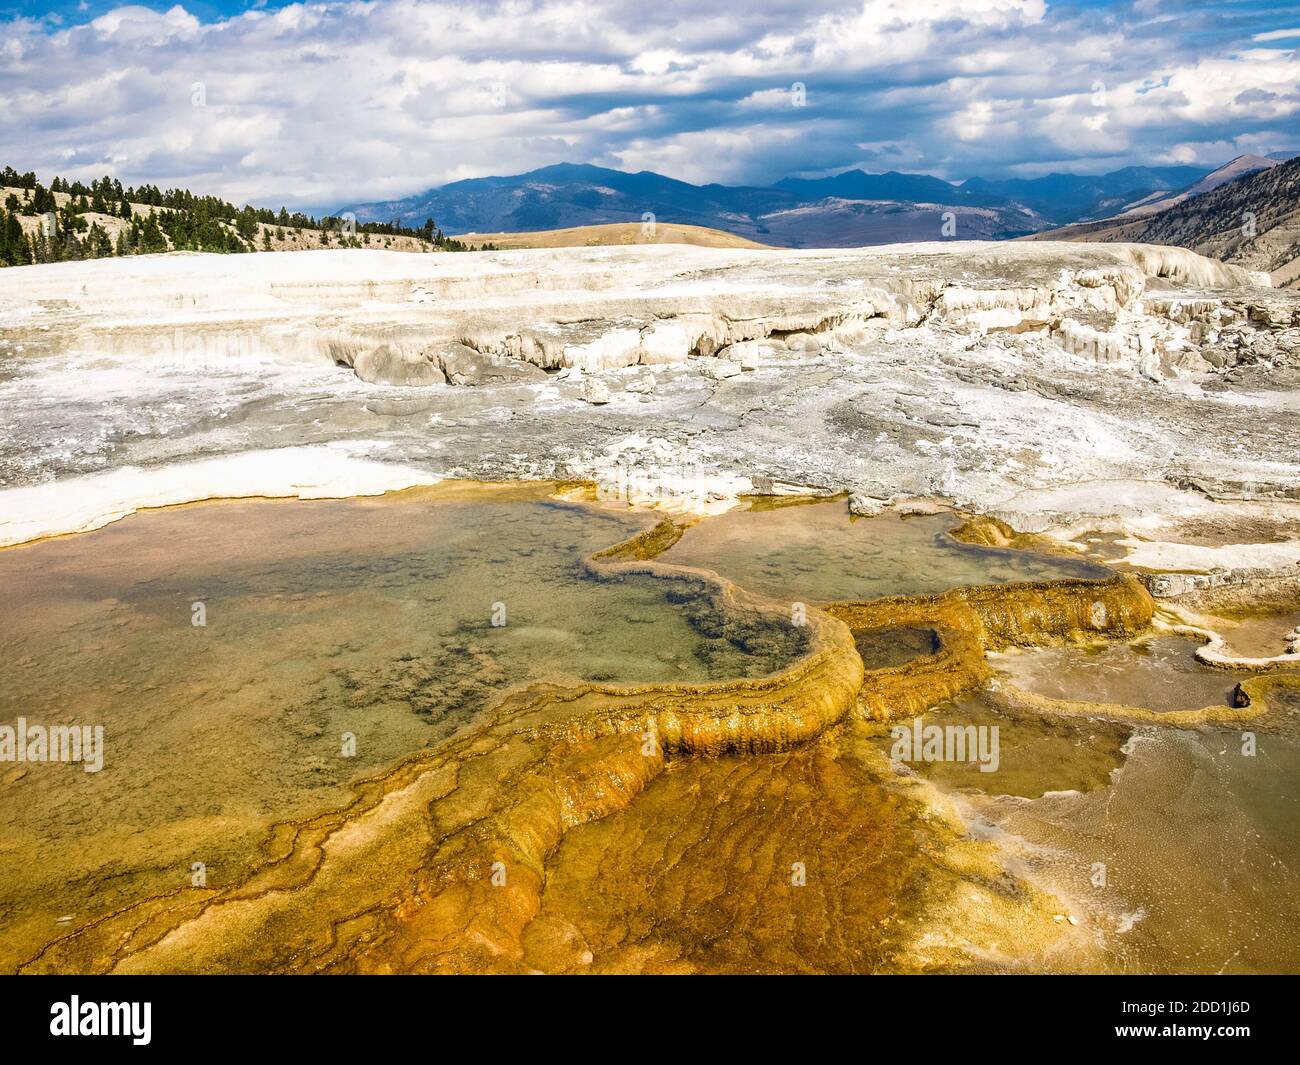 Mamoth Hot springs - sulfur springs - geological wonder, Yellow Stone National Park, MO Stock Photo